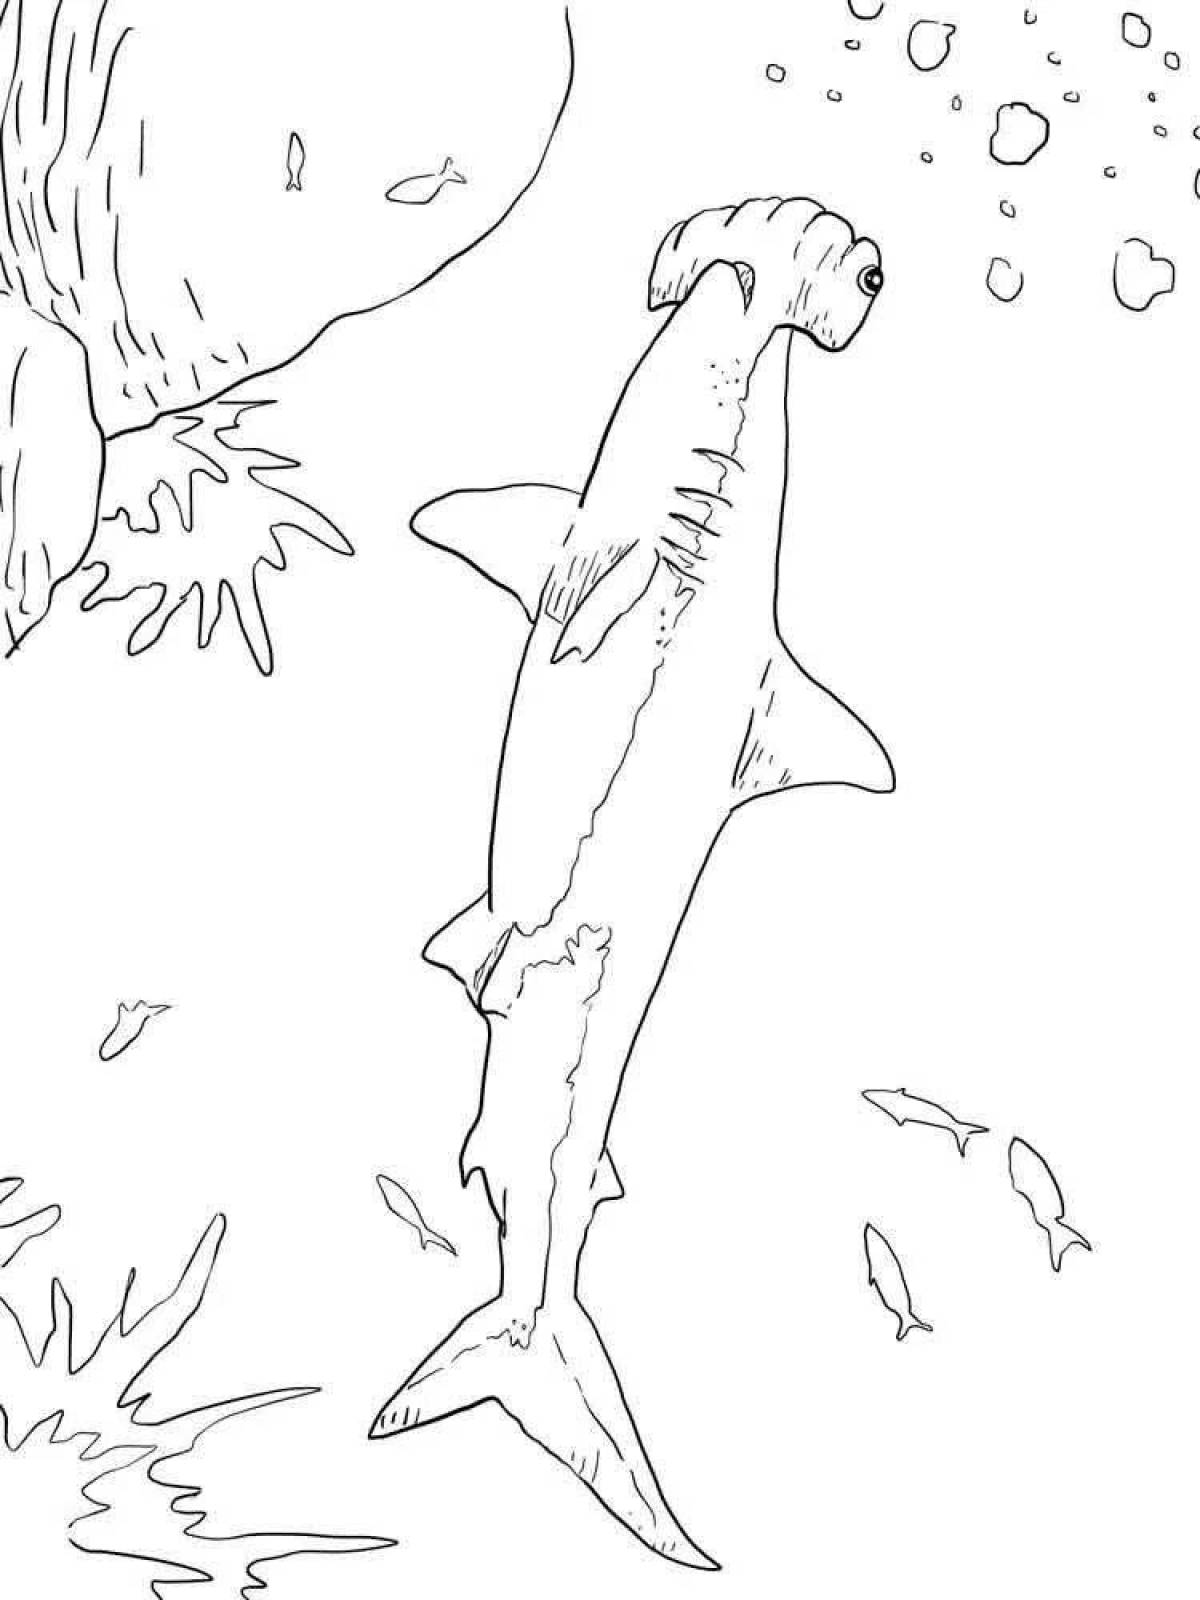 Coloring book magnanimous hammerhead shark